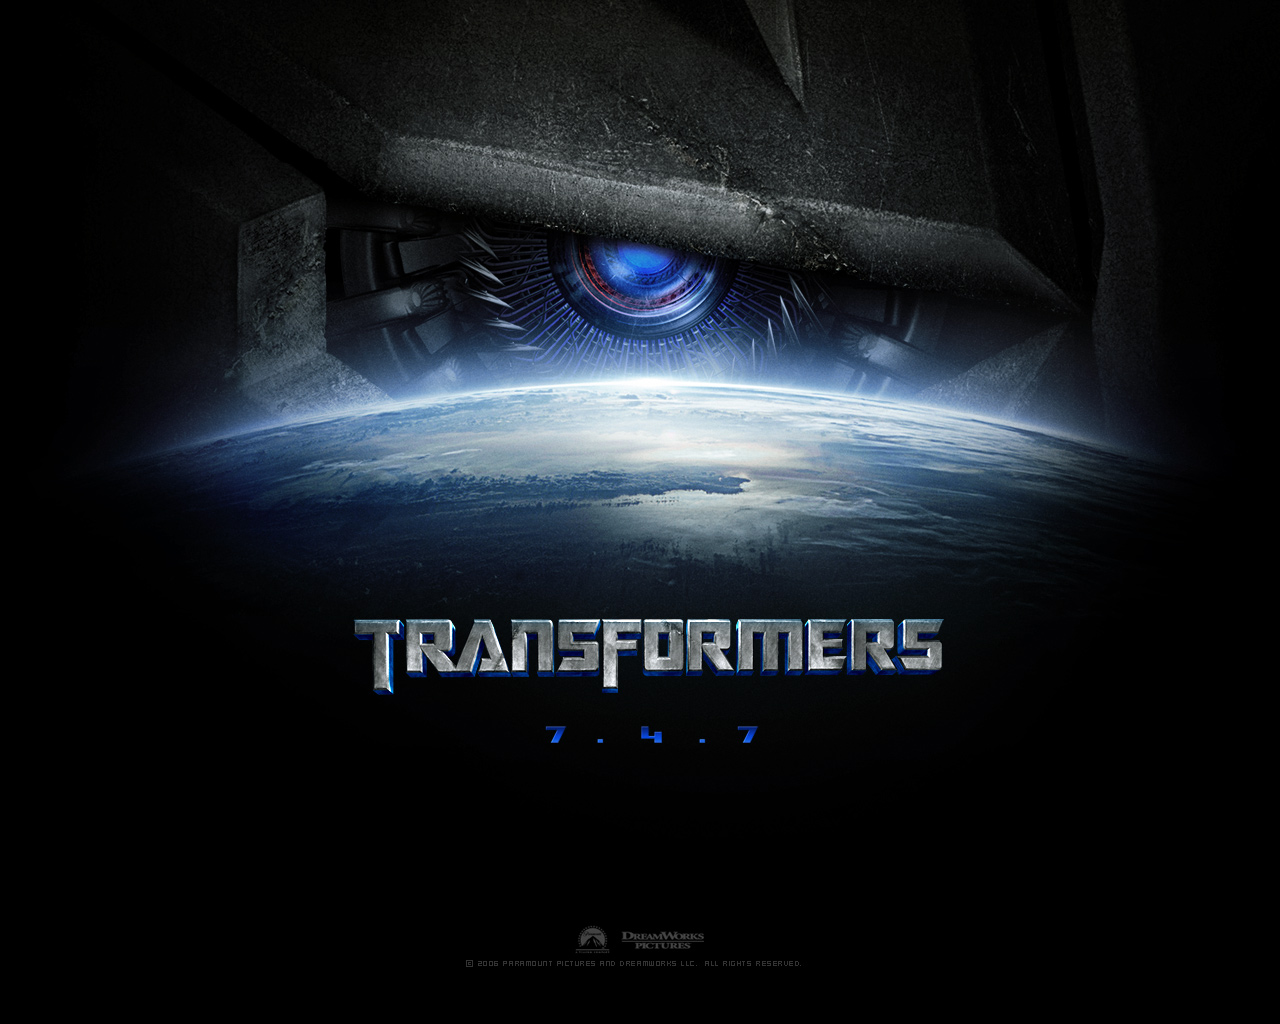 Transformers Trailer Movie Res Wallpaper